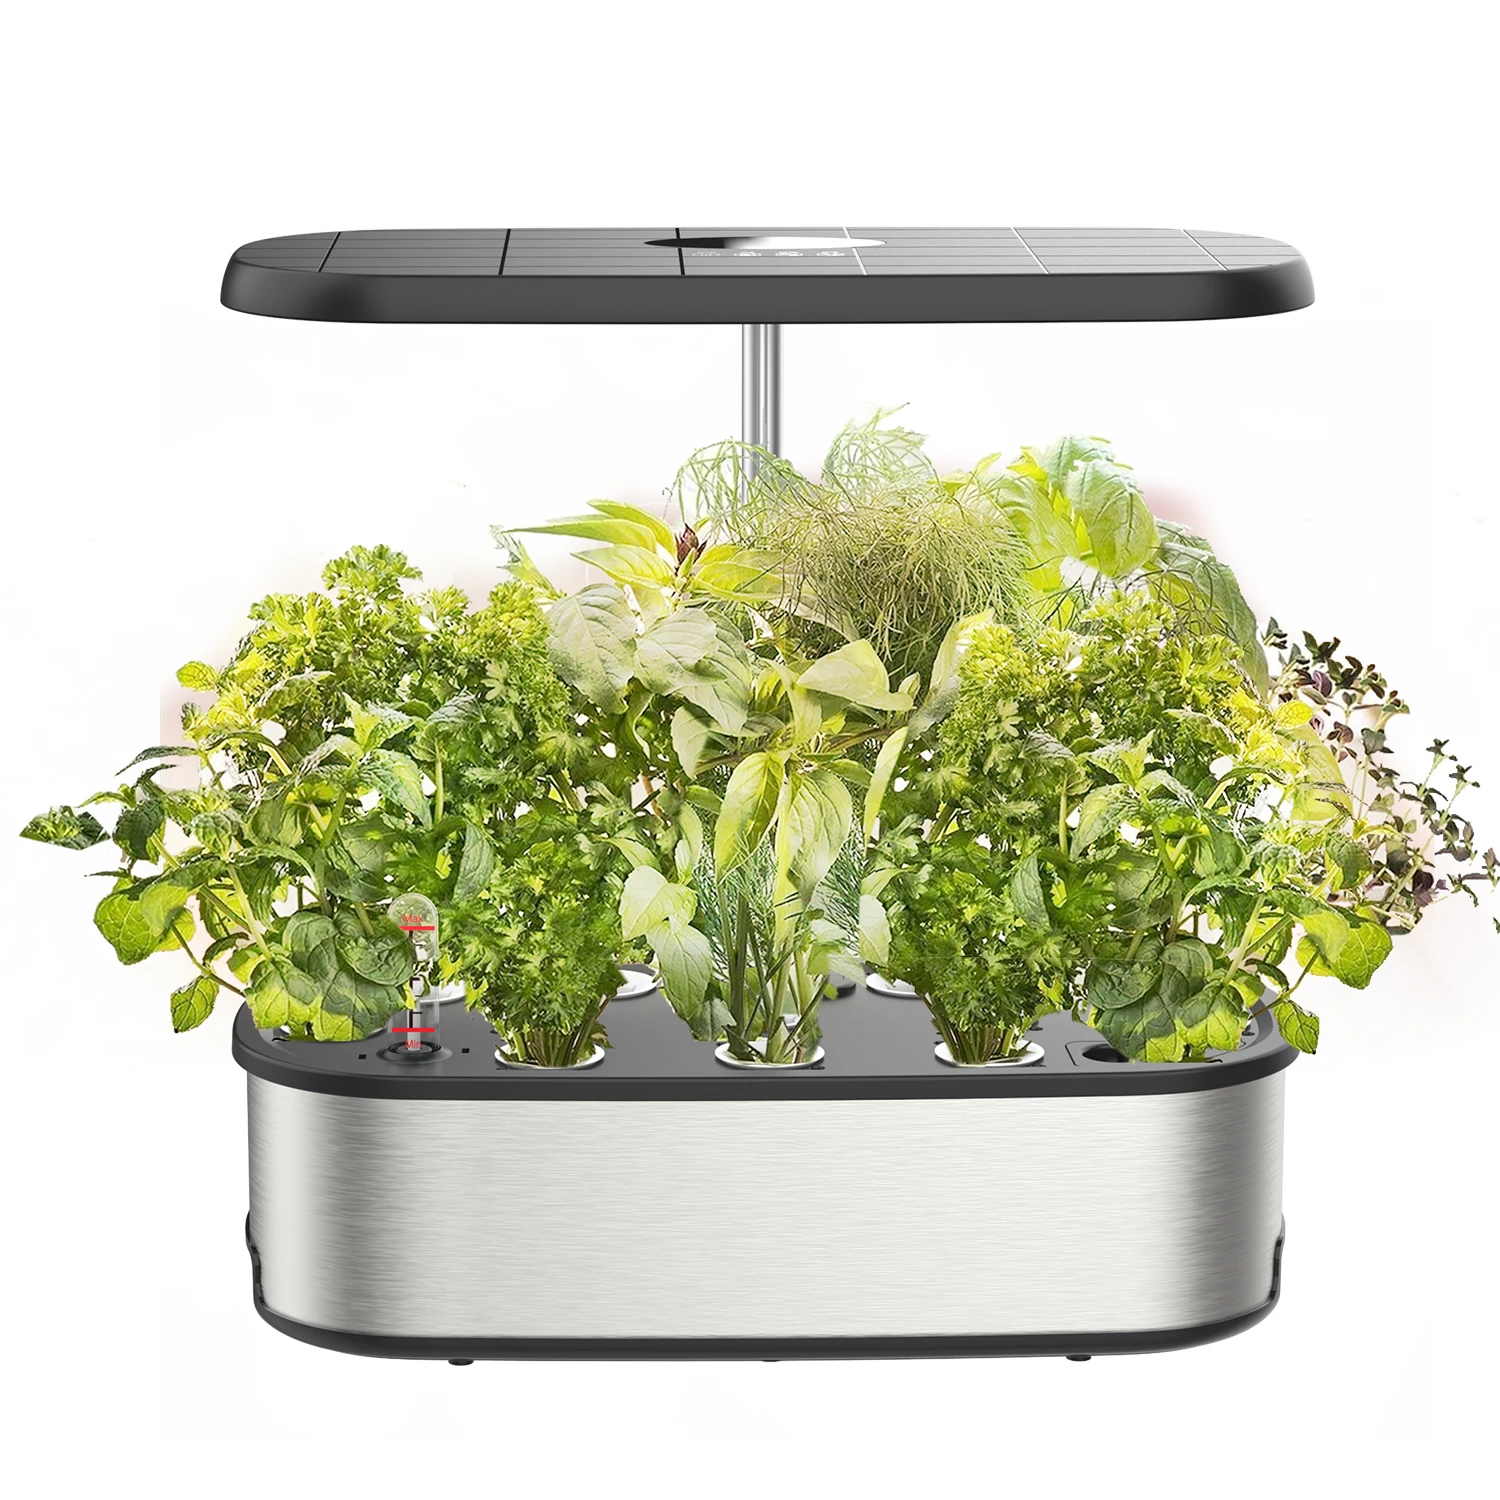 Hydroponic Growth System Kits Indoor vegetable Planter Machine LED full spectrum Lighting planting Box/Metal frame